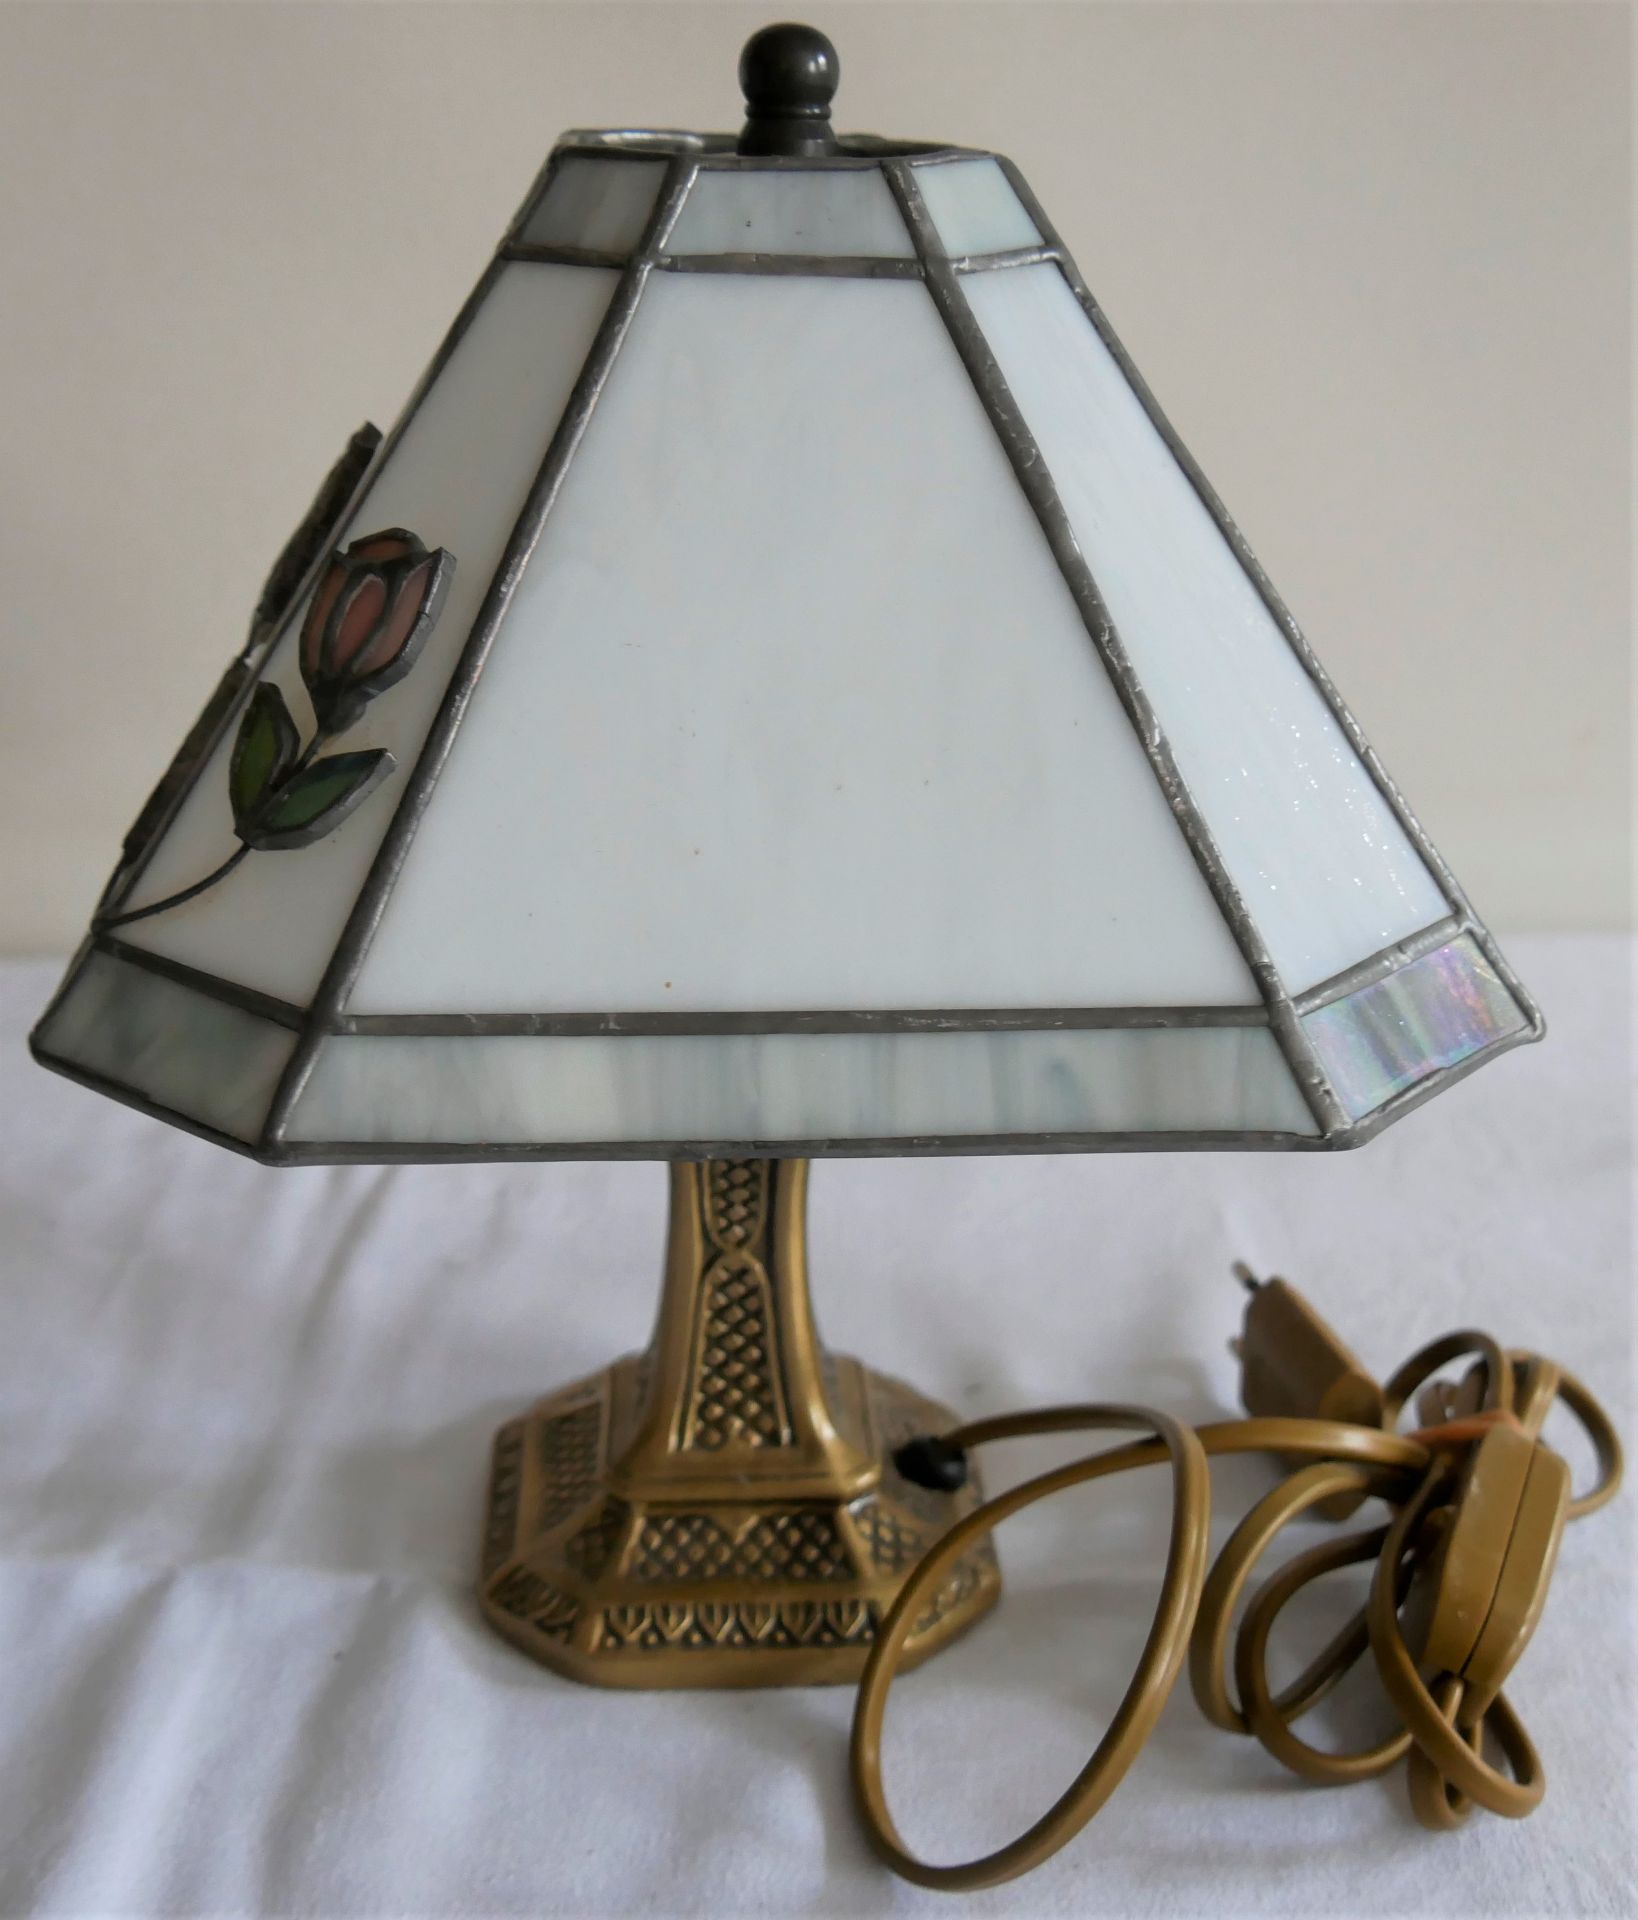 Vintage Tischlampe im Tiffany Stil "Tulpen" Funktion nicht geprüft. Höhe ca. 29 cm. Bitte - Image 2 of 2